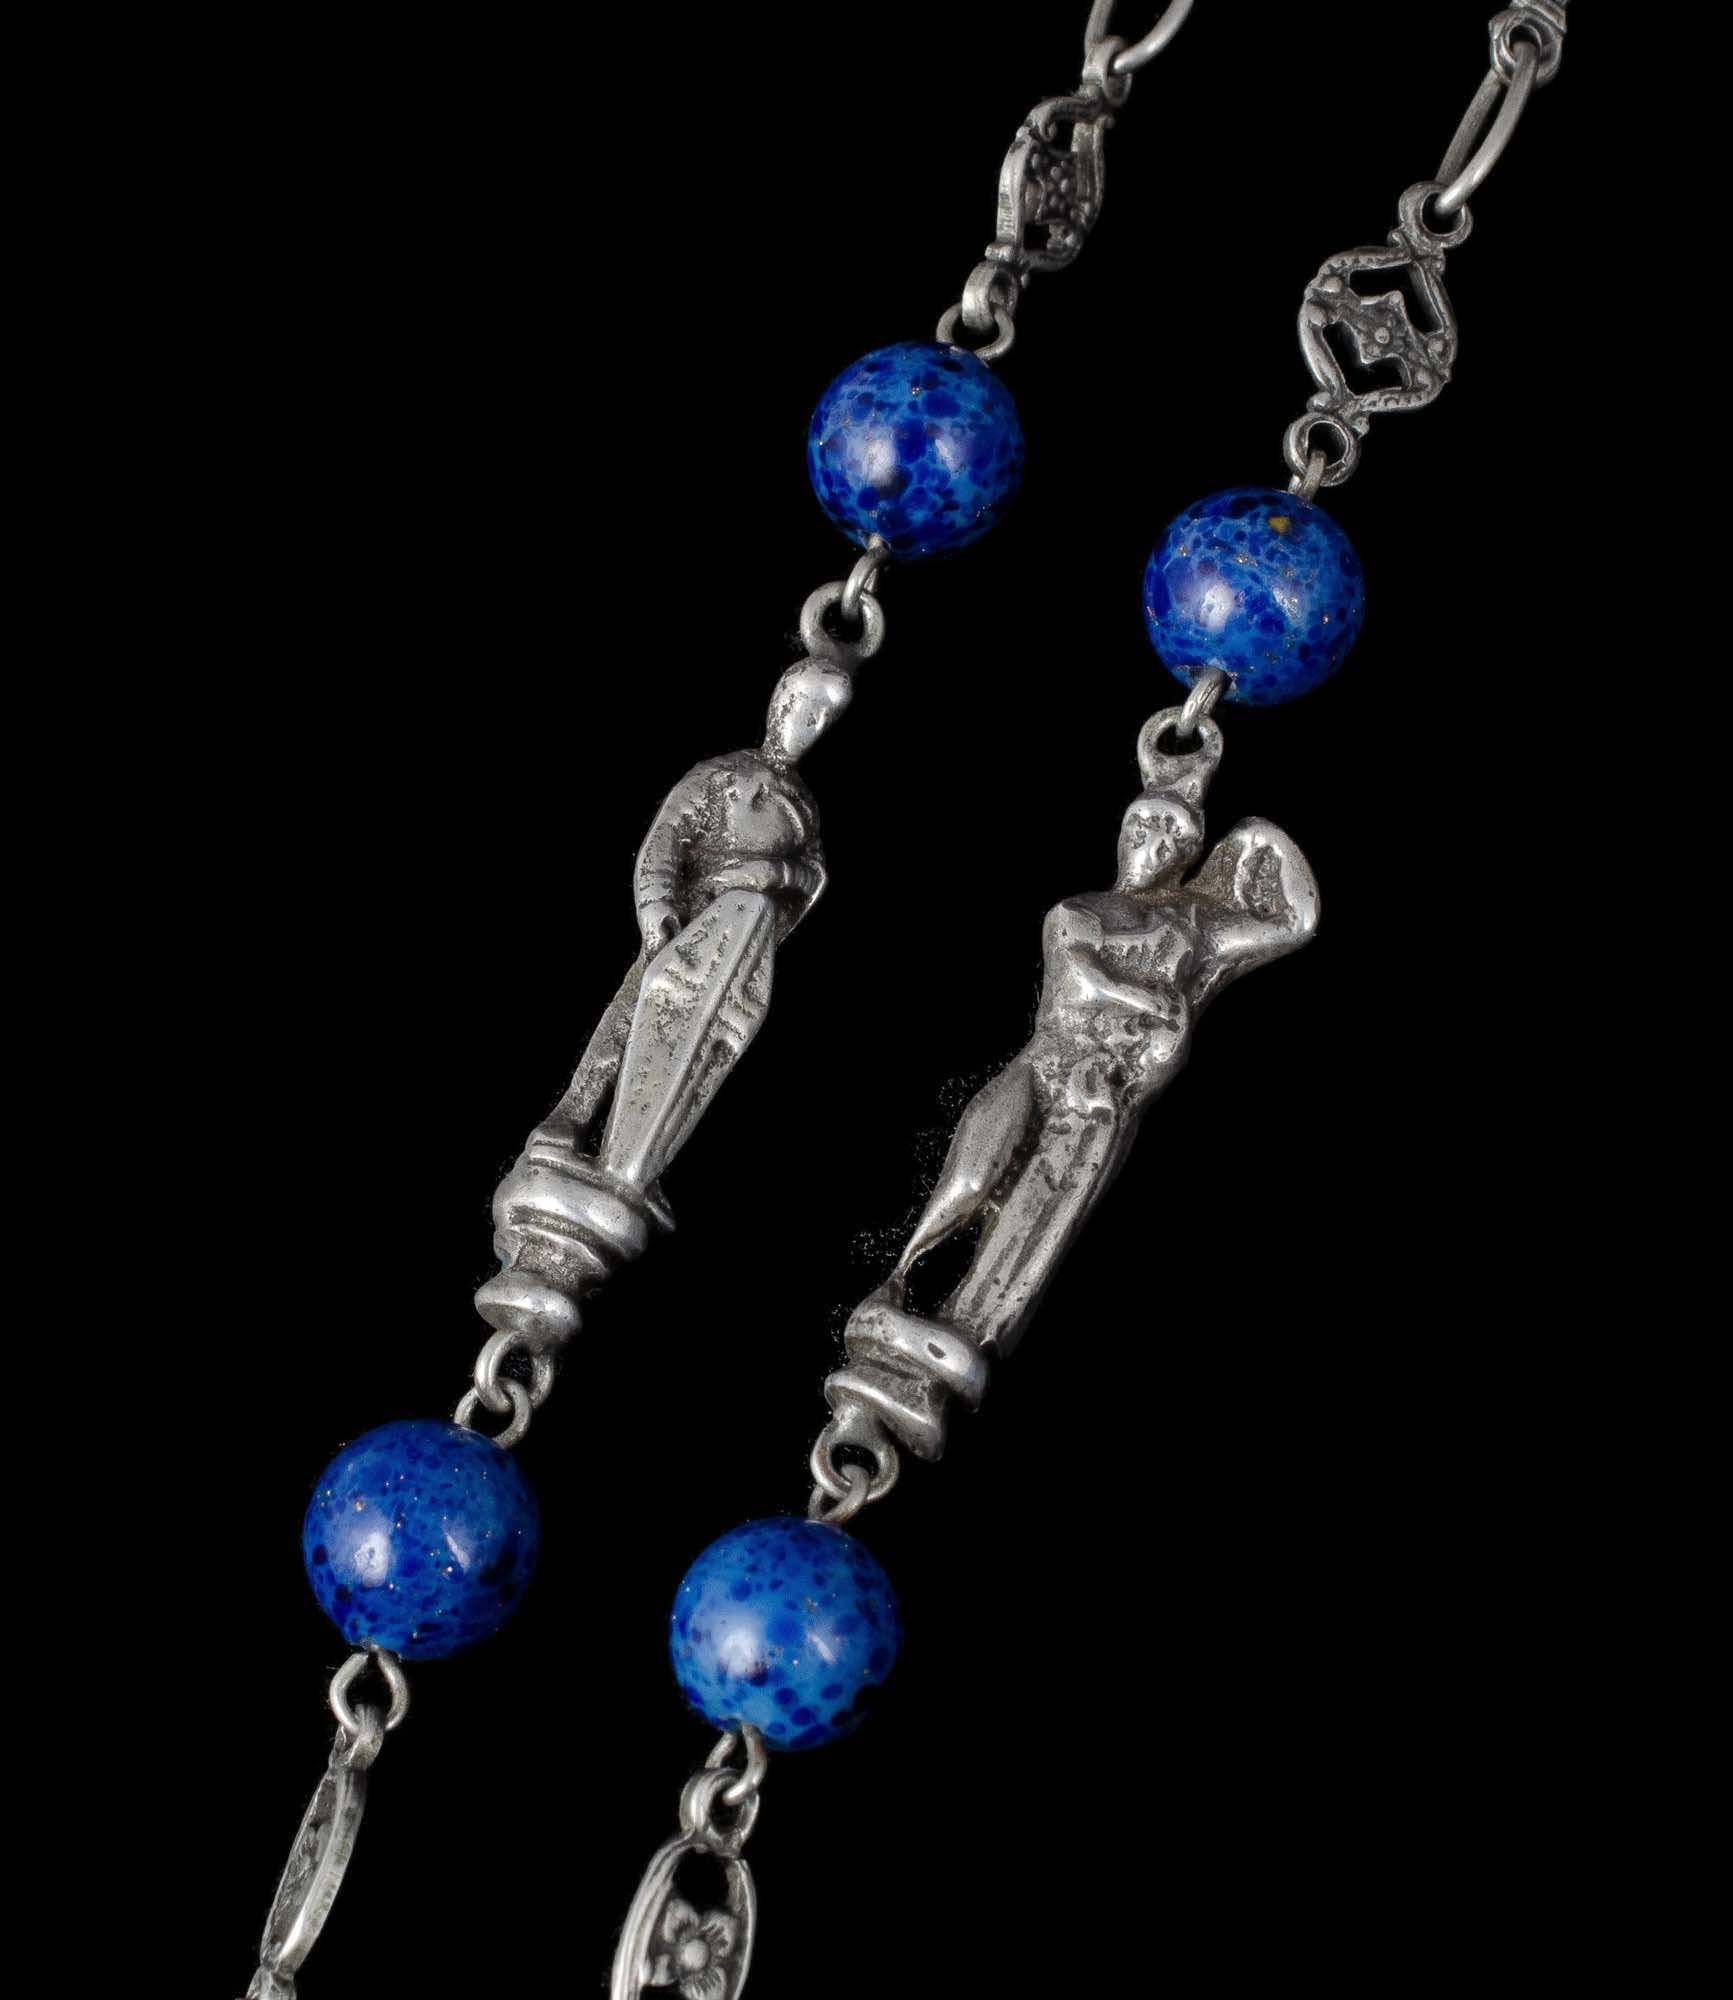 Italian Renaissance Revival silver sodalite Chain Necklace